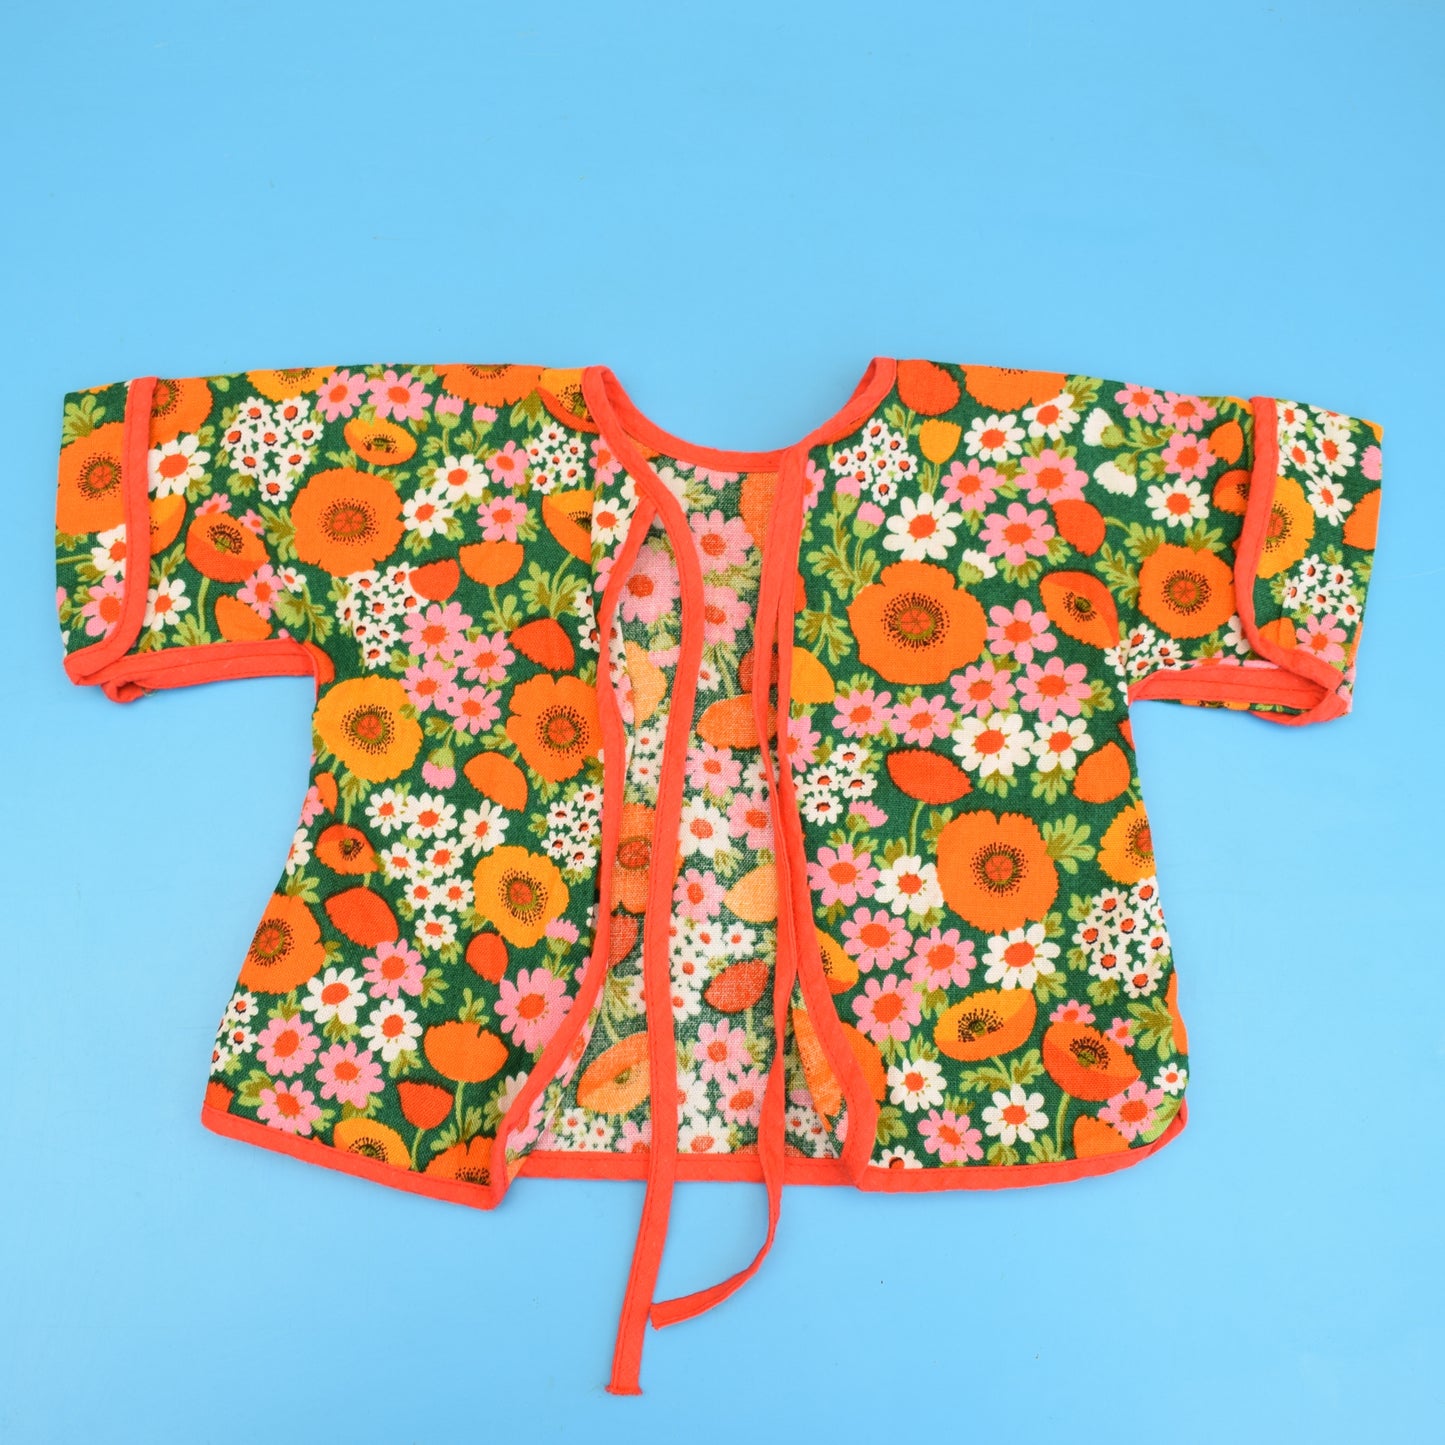 Vintage 1960s Baby Jacket - Flower Power